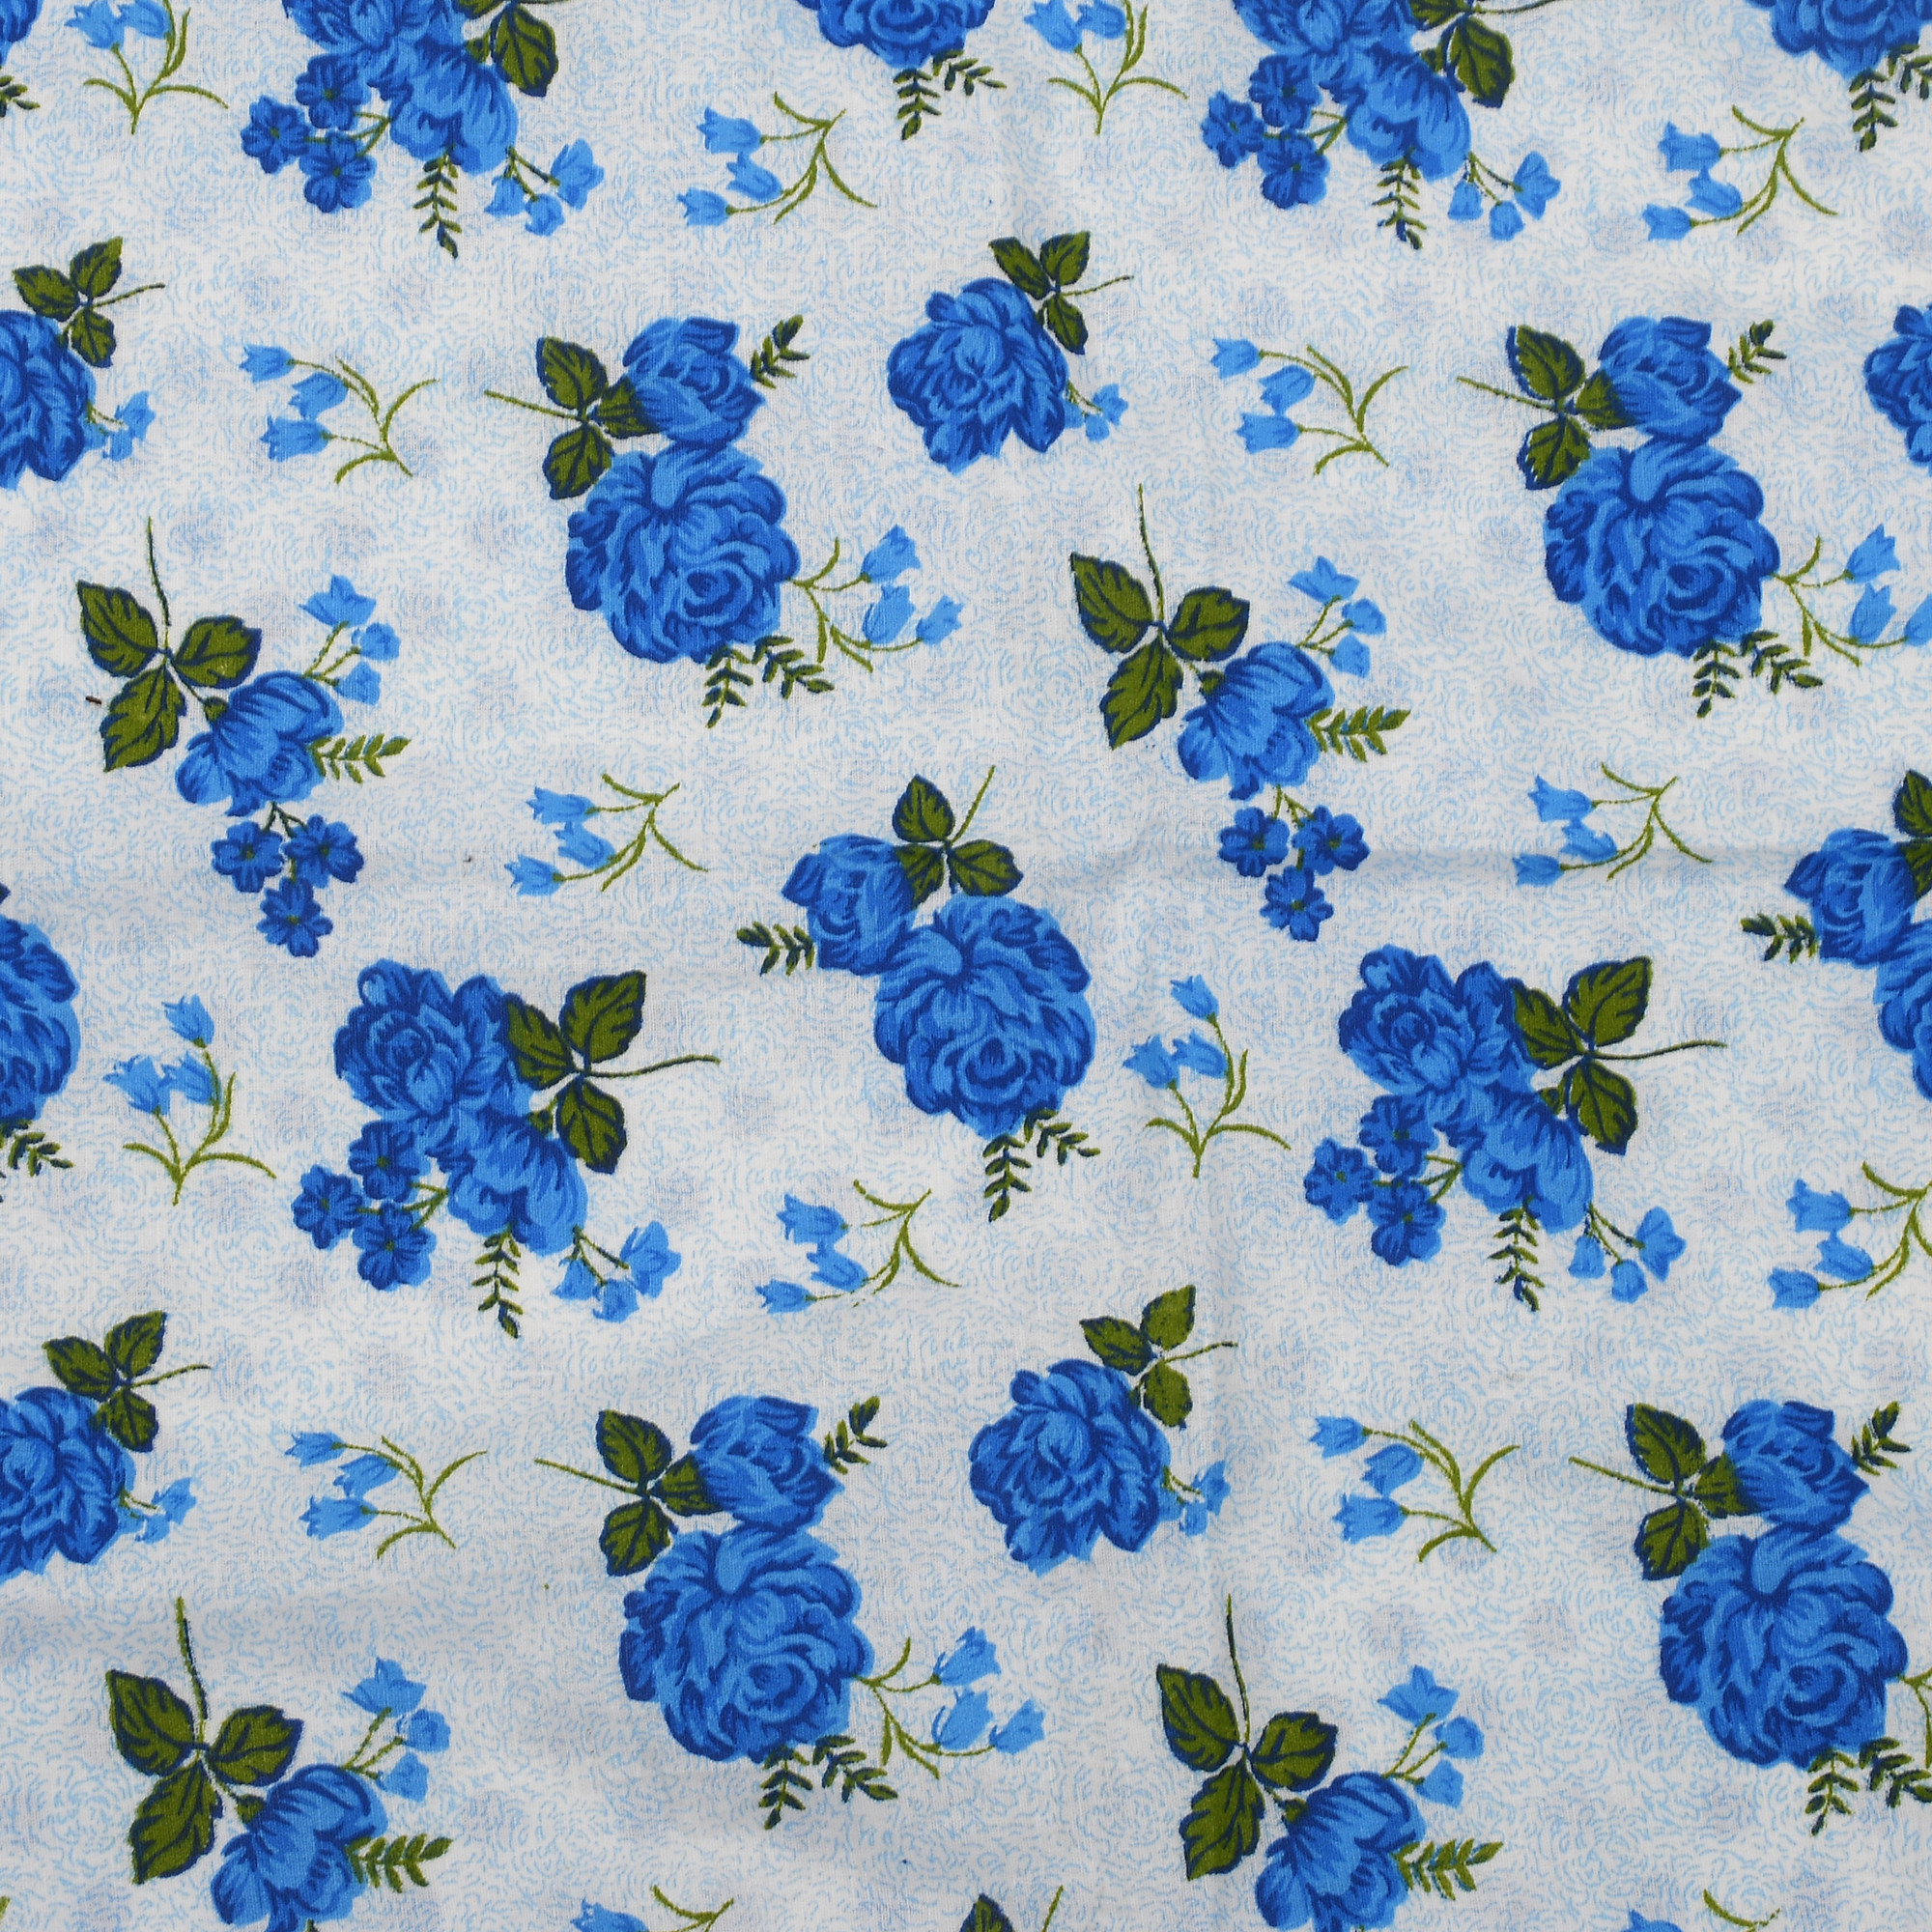 Kuber Industries Flower Design Premium Cotton Pillow Covers, 18 x 28 inch,(Blue)